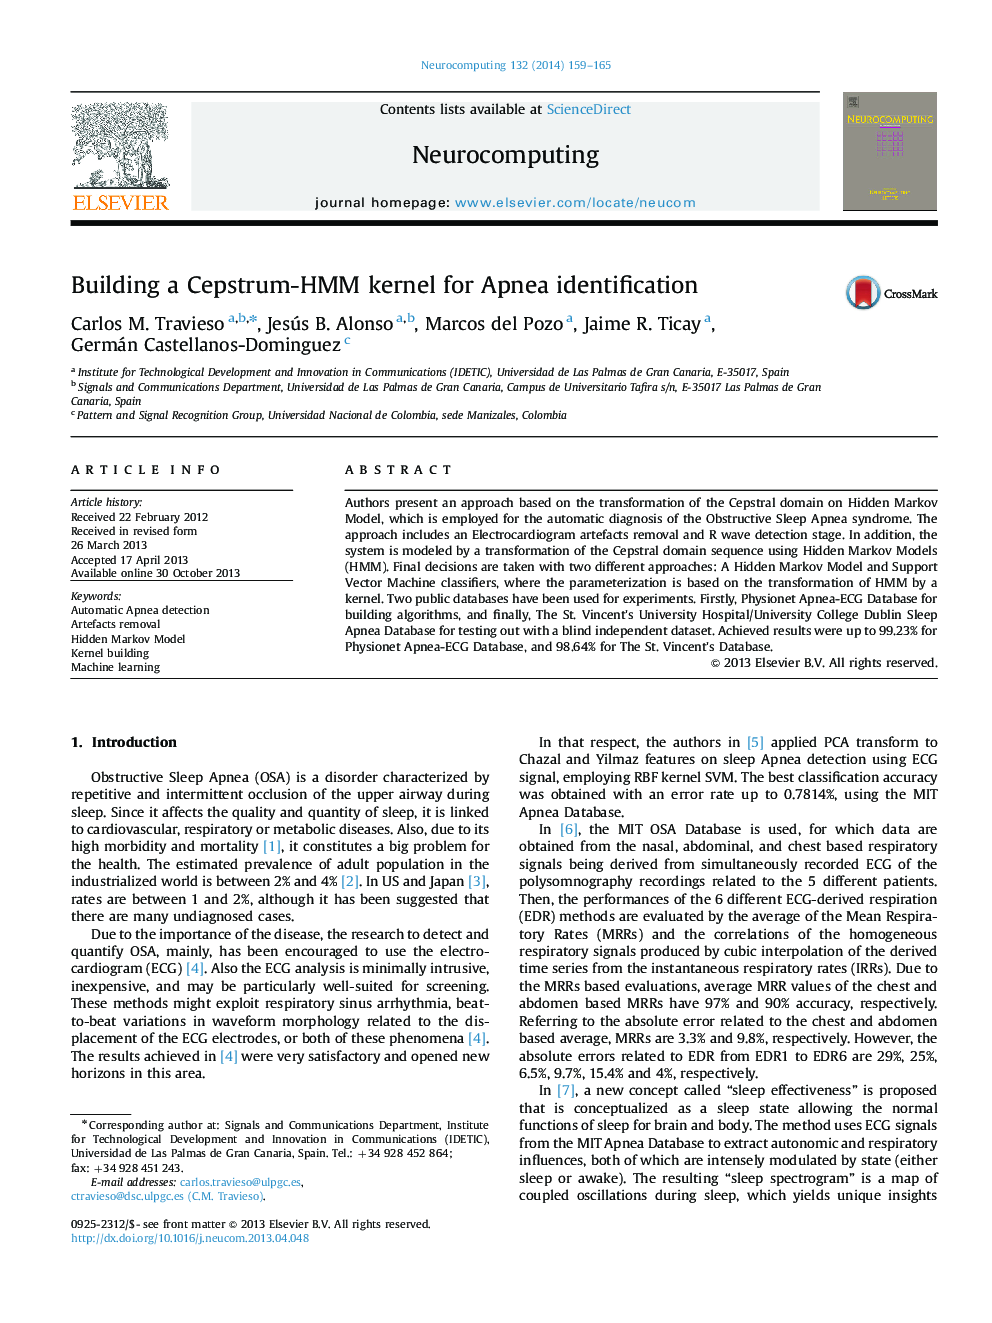 Building a Cepstrum-HMM kernel for Apnea identification